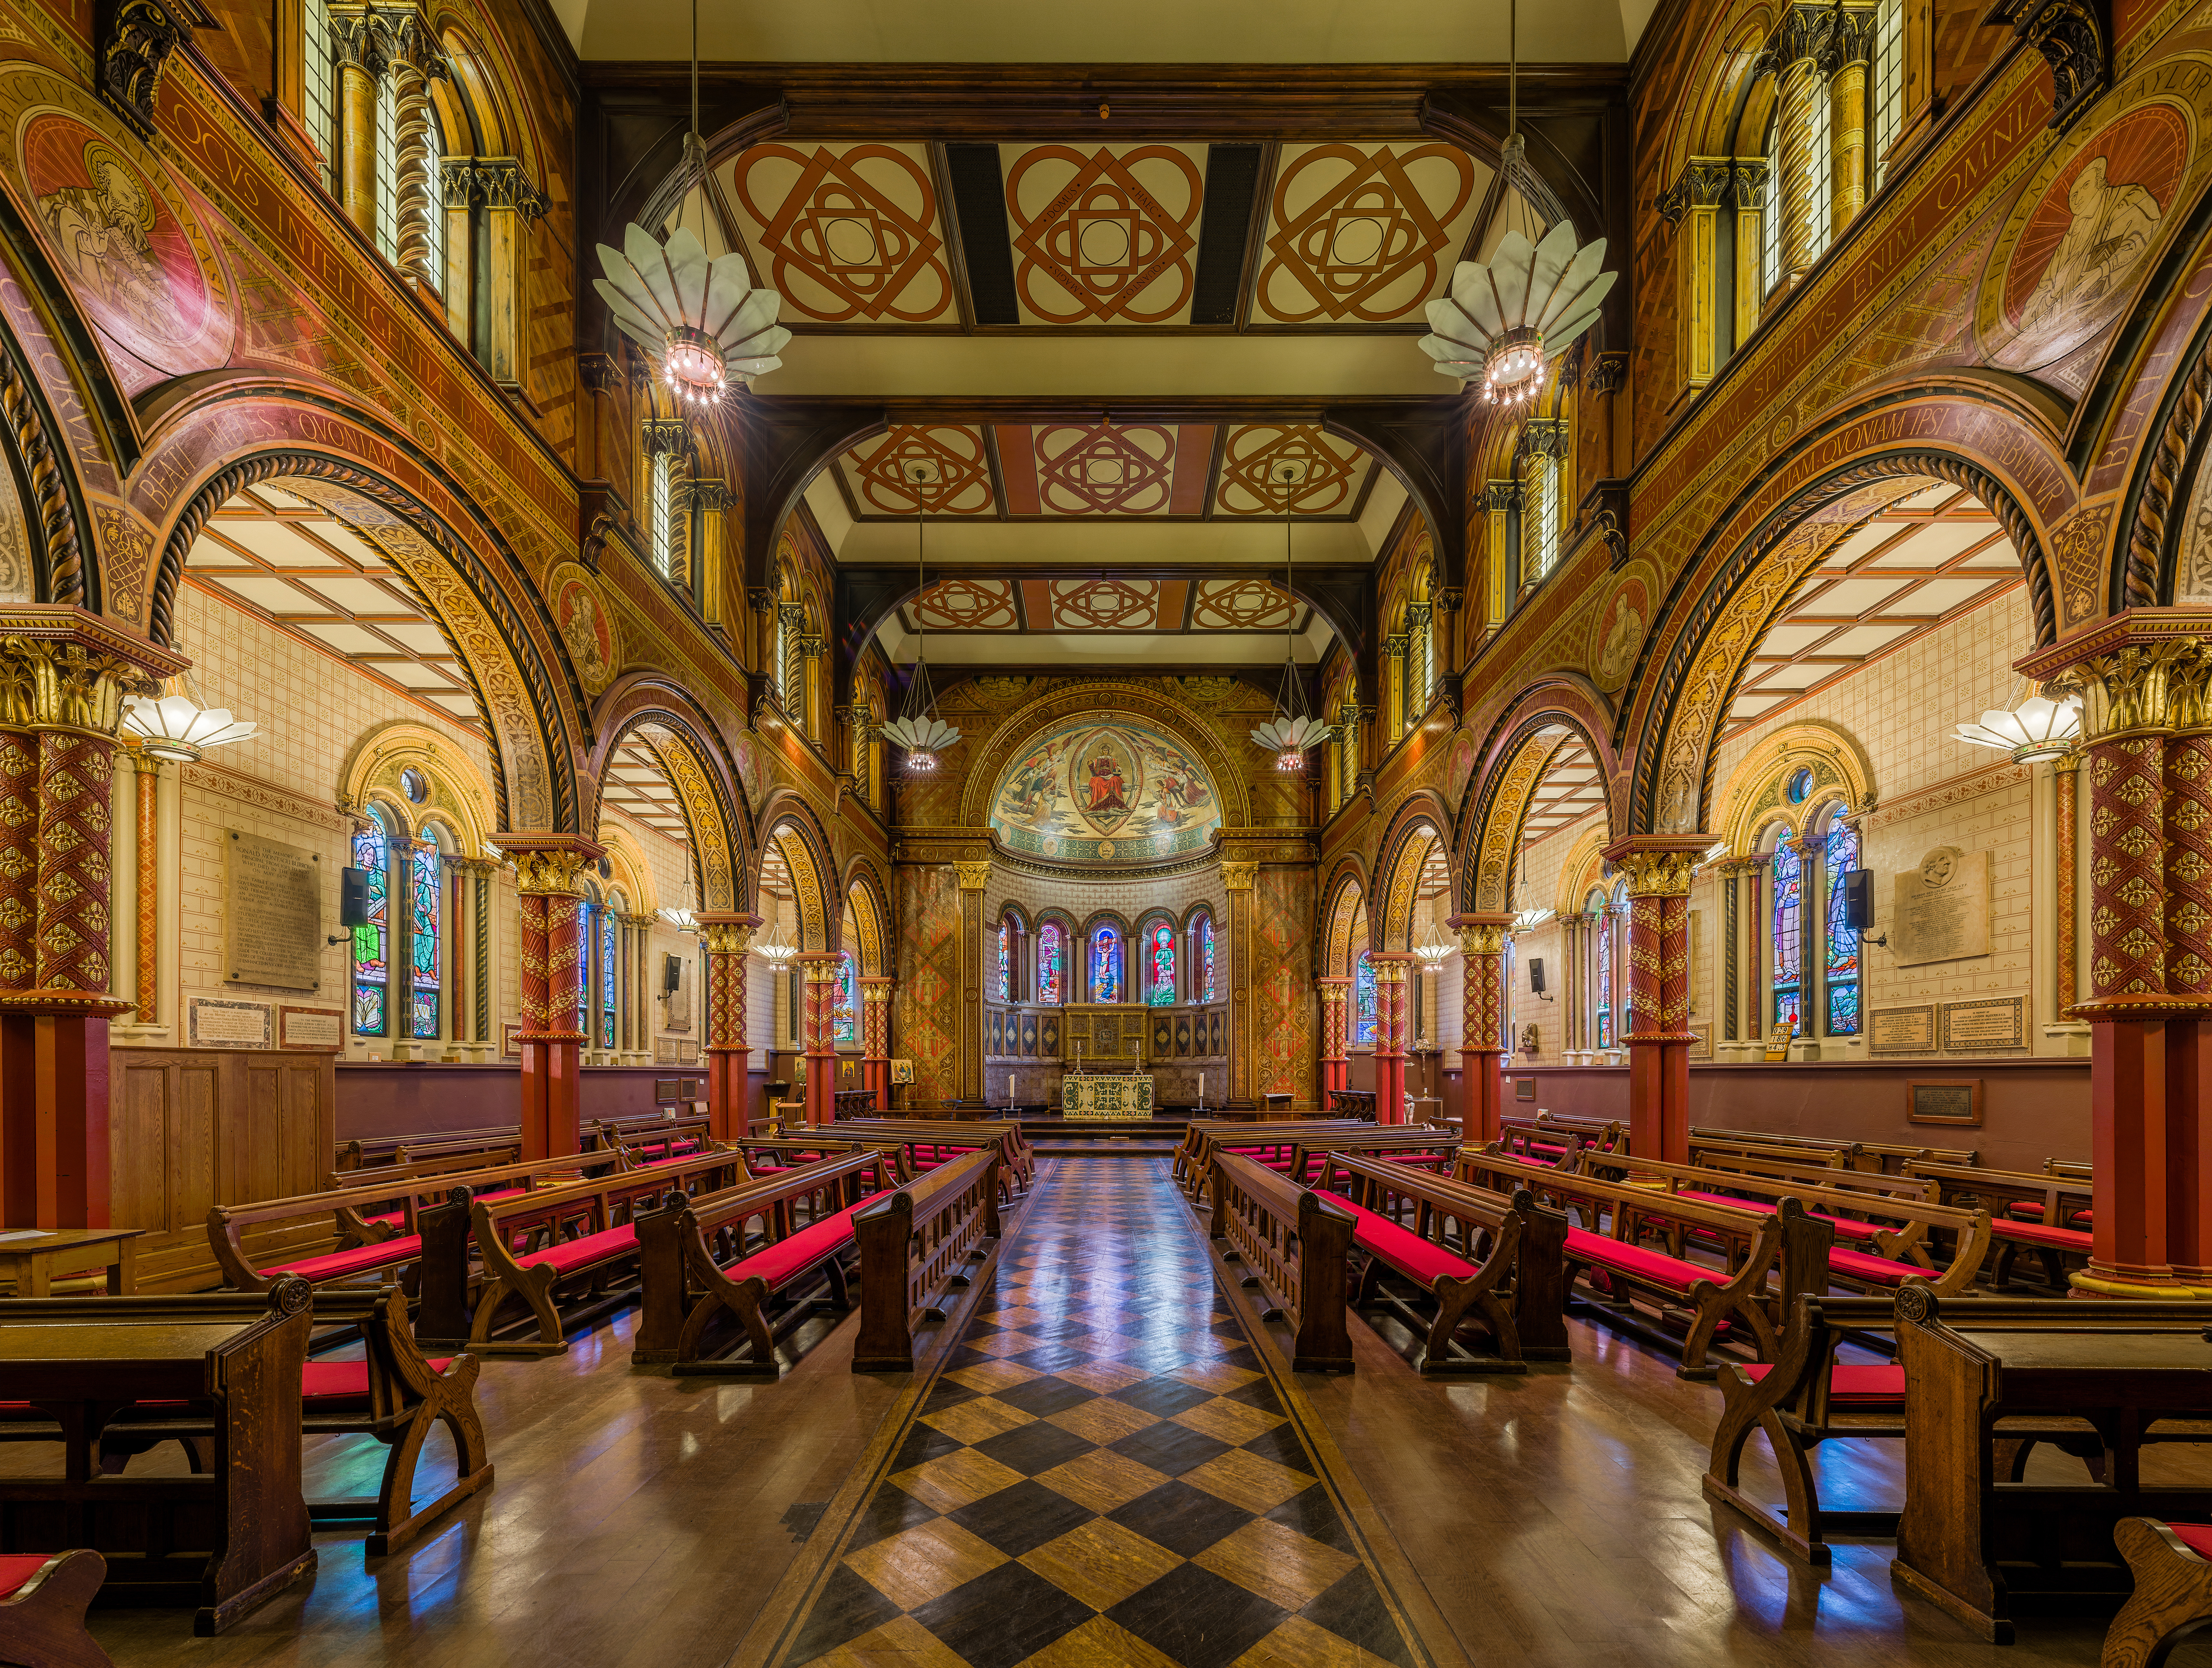 King's College London Chapel - Wikipedia